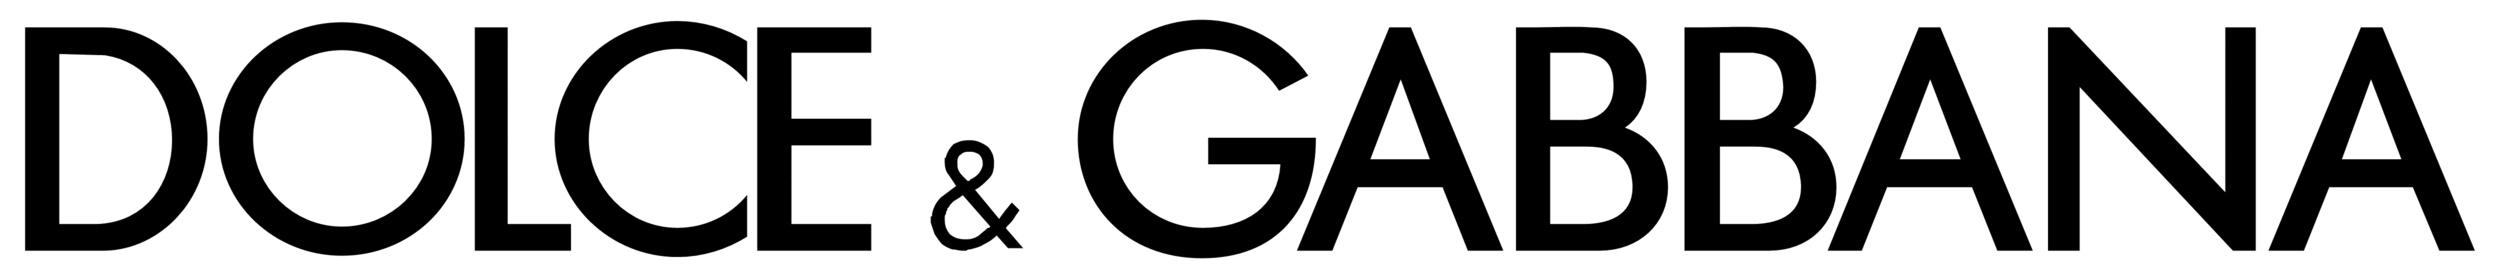 Dolce__Gabbana_logo.png